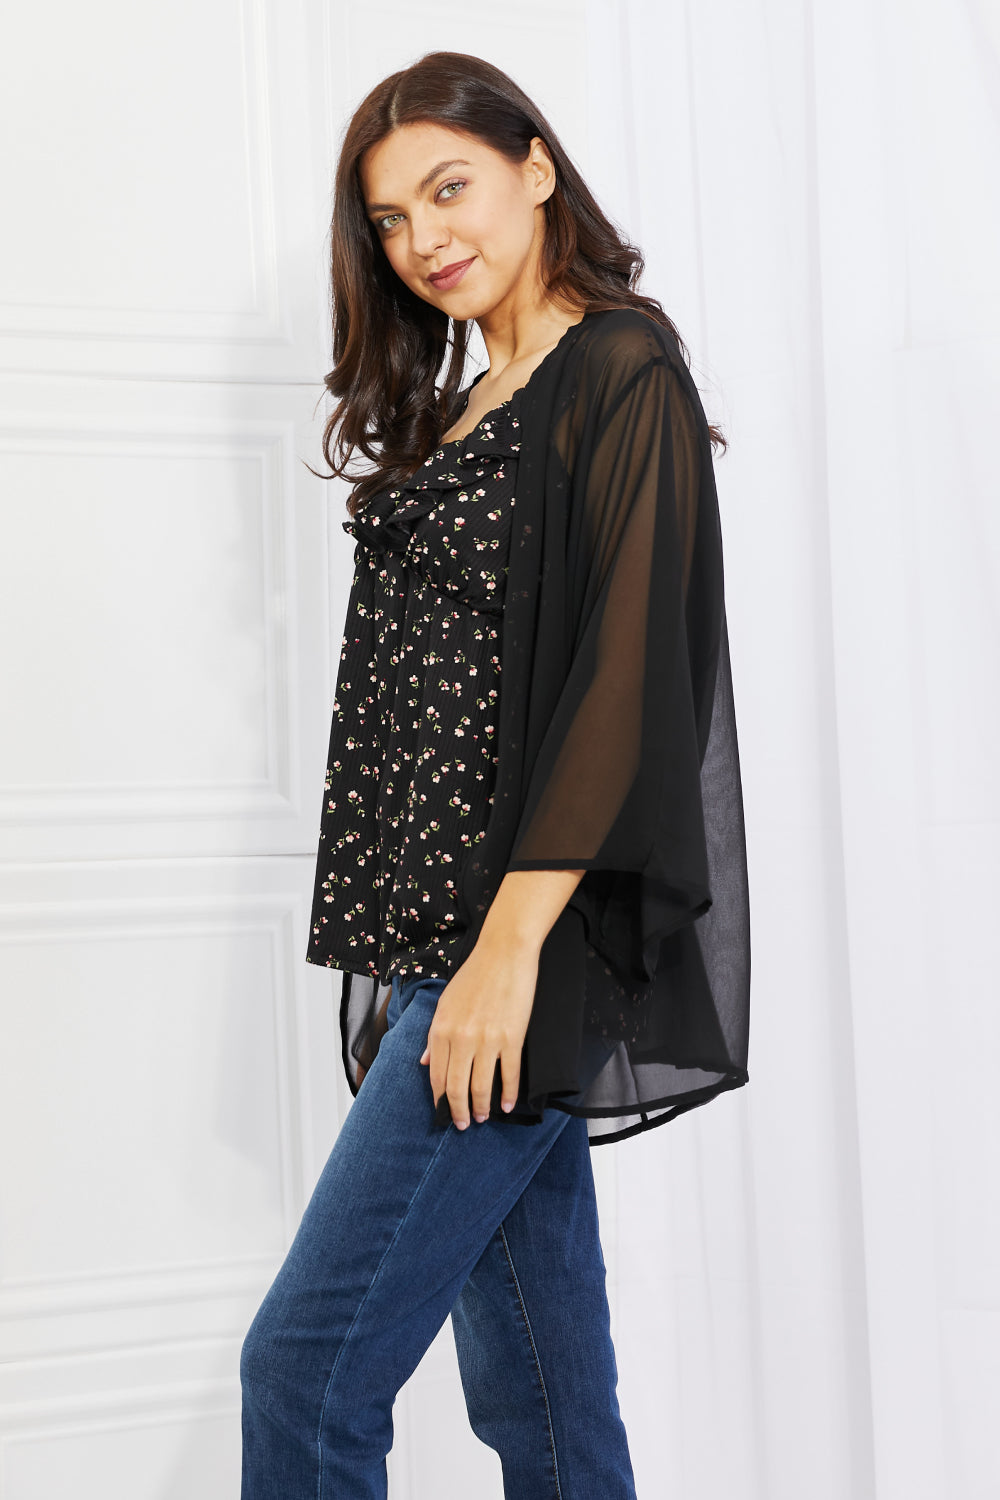 Melody Just Breathe Full Size Chiffon Kimono in Black - Cheeky Chic Boutique